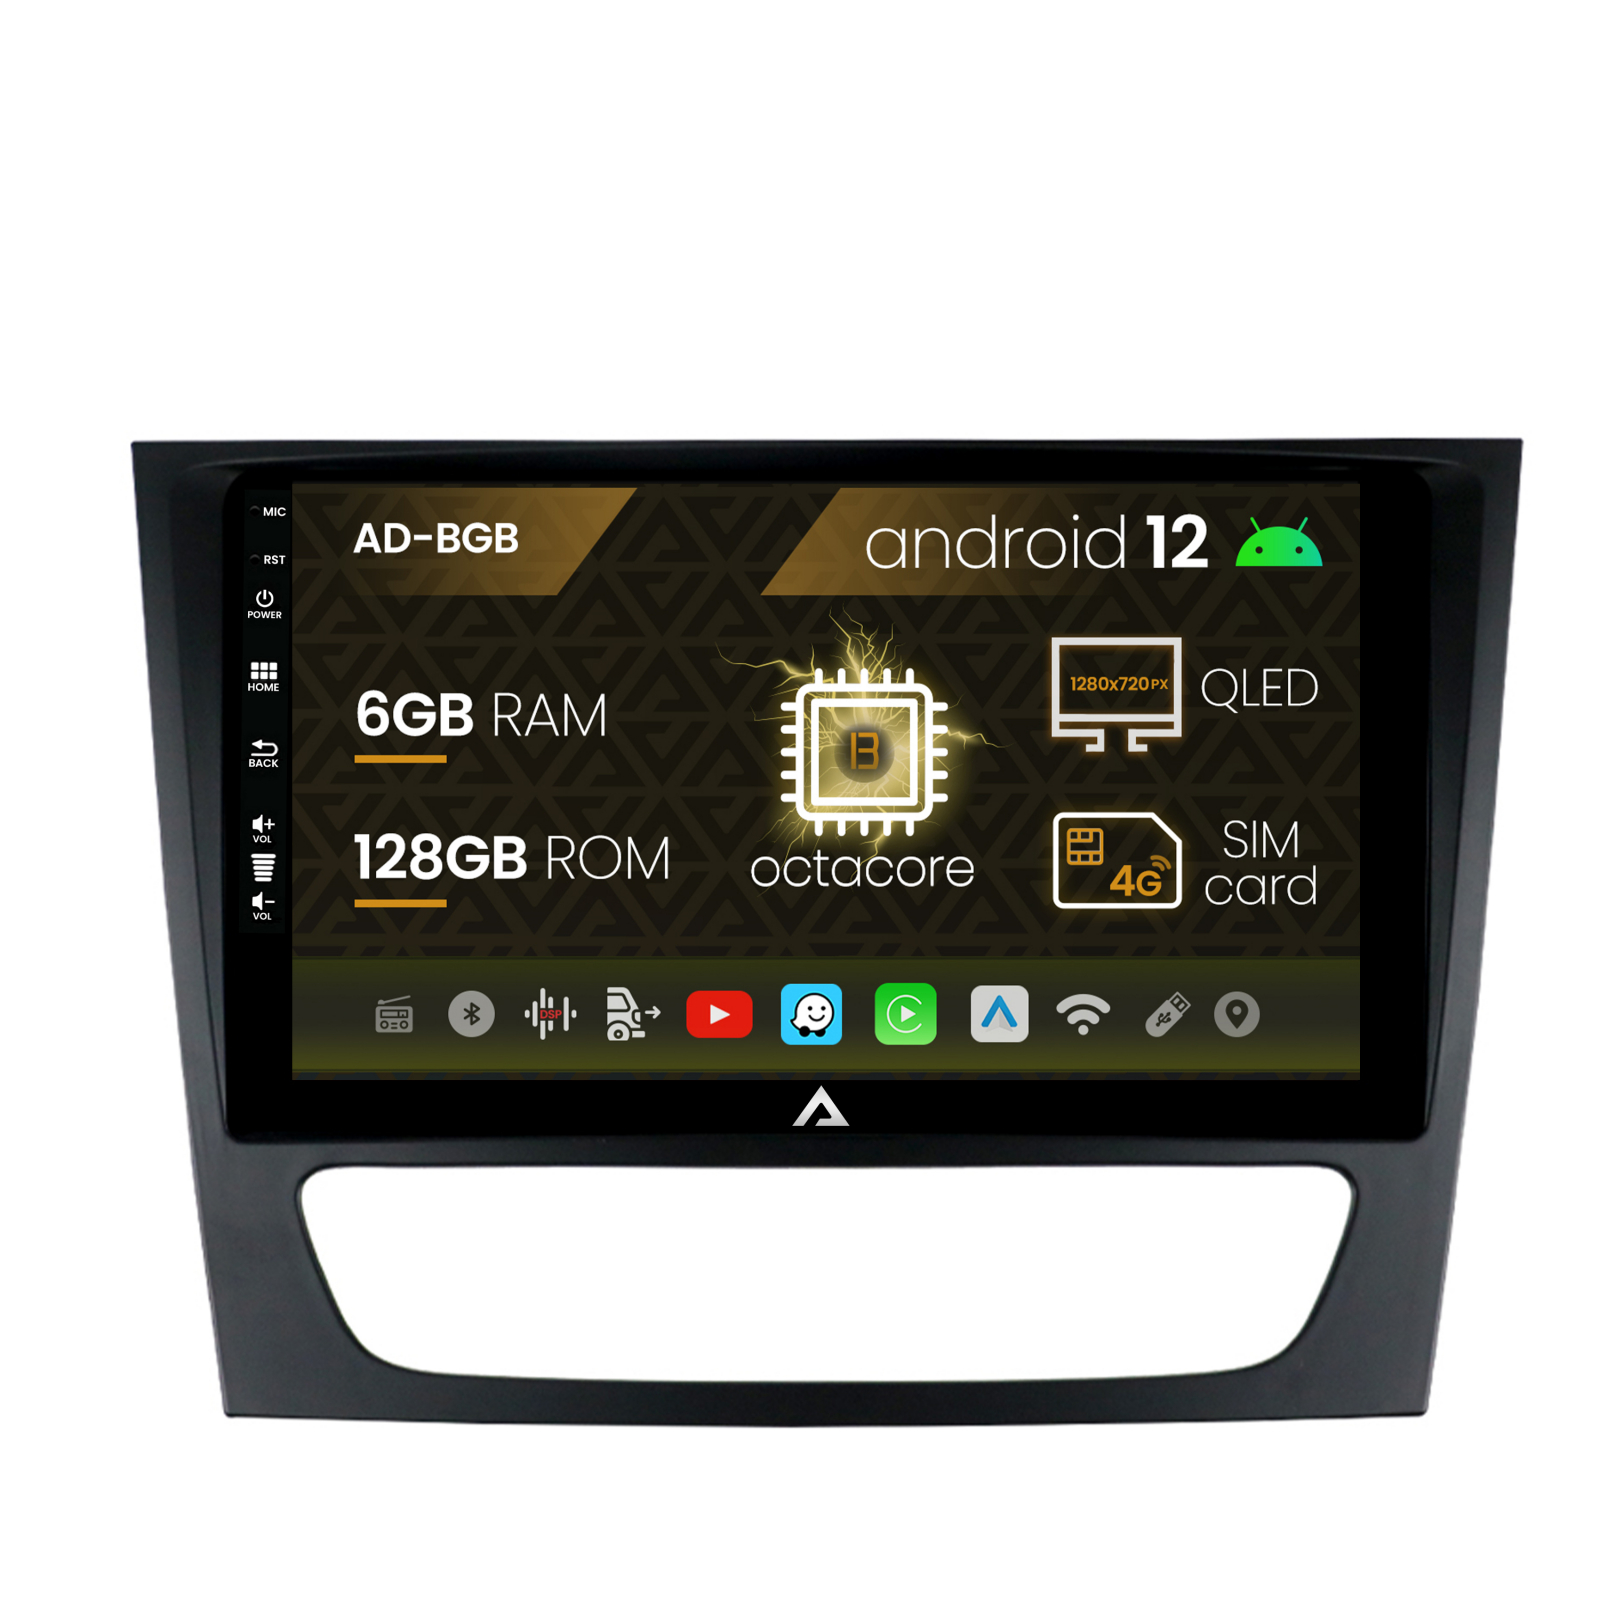 Navigatie Mercedes Benz W211/CLS, Android 12, B-Octacore / 6GB RAM + 128GB ROM, 9 Inch - AD-BGB9006+AD-BGRKIT415